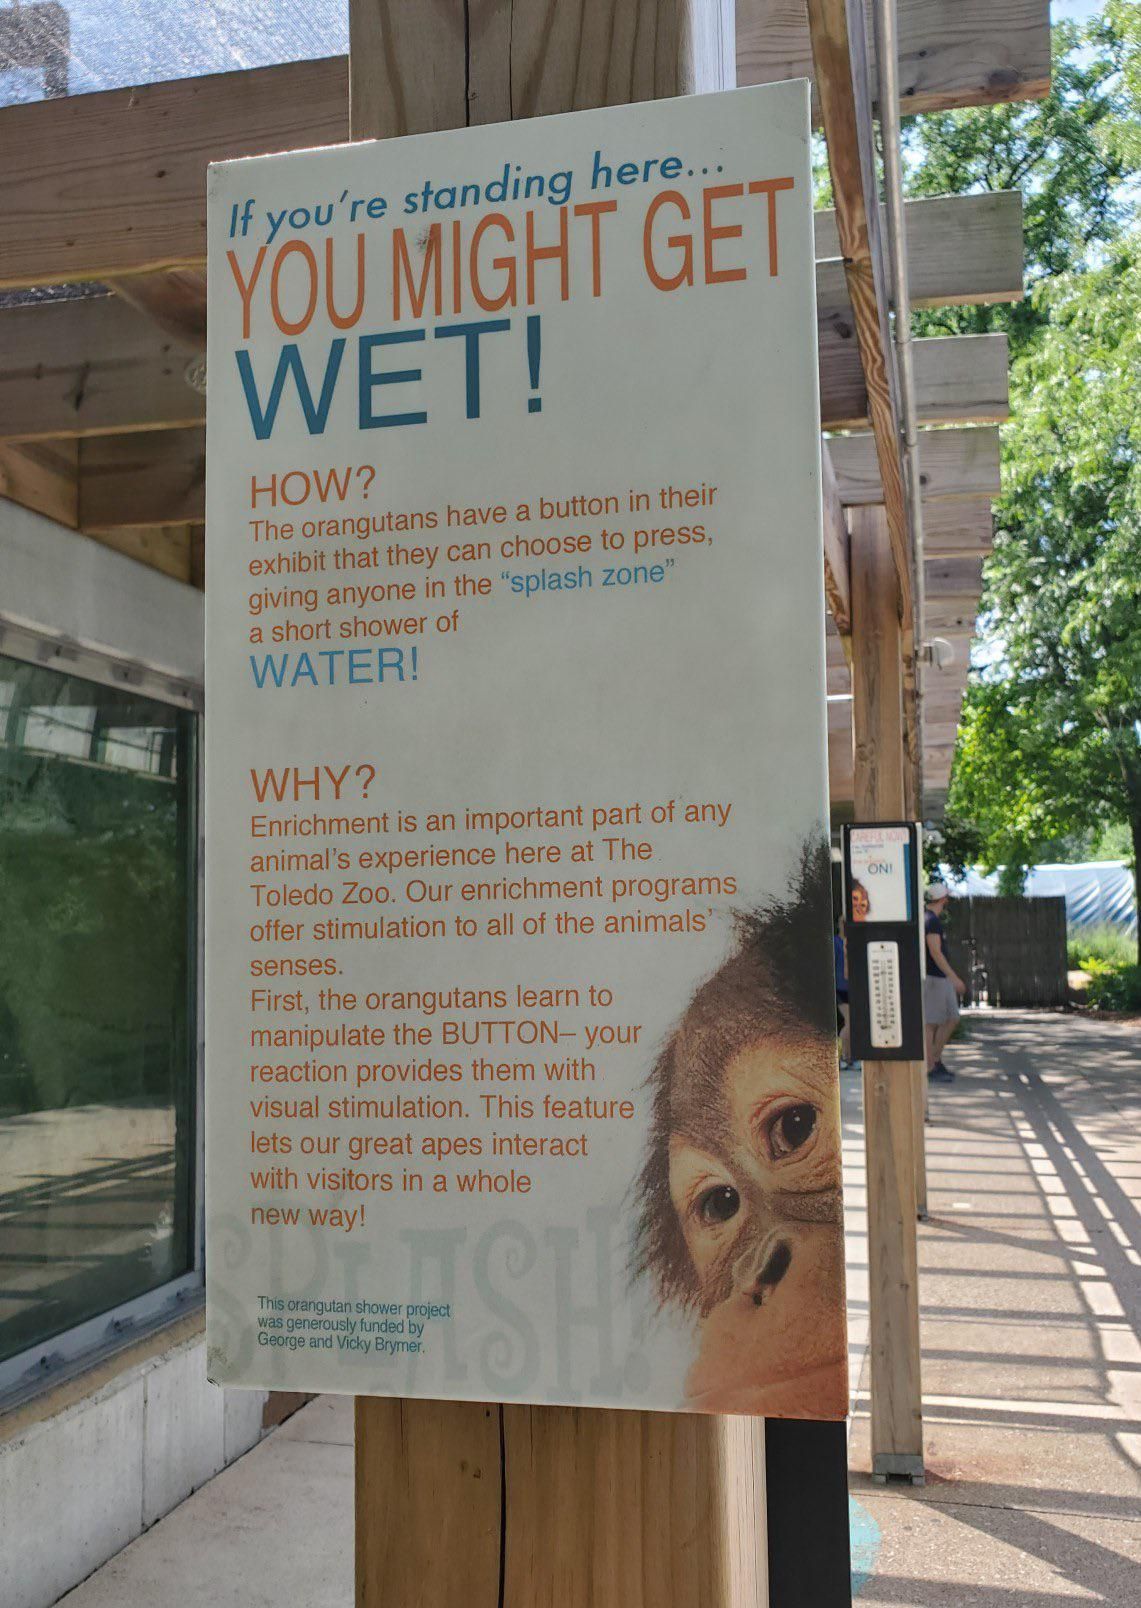 The Toledo Zoo setup a way for orangutans to splash visitors